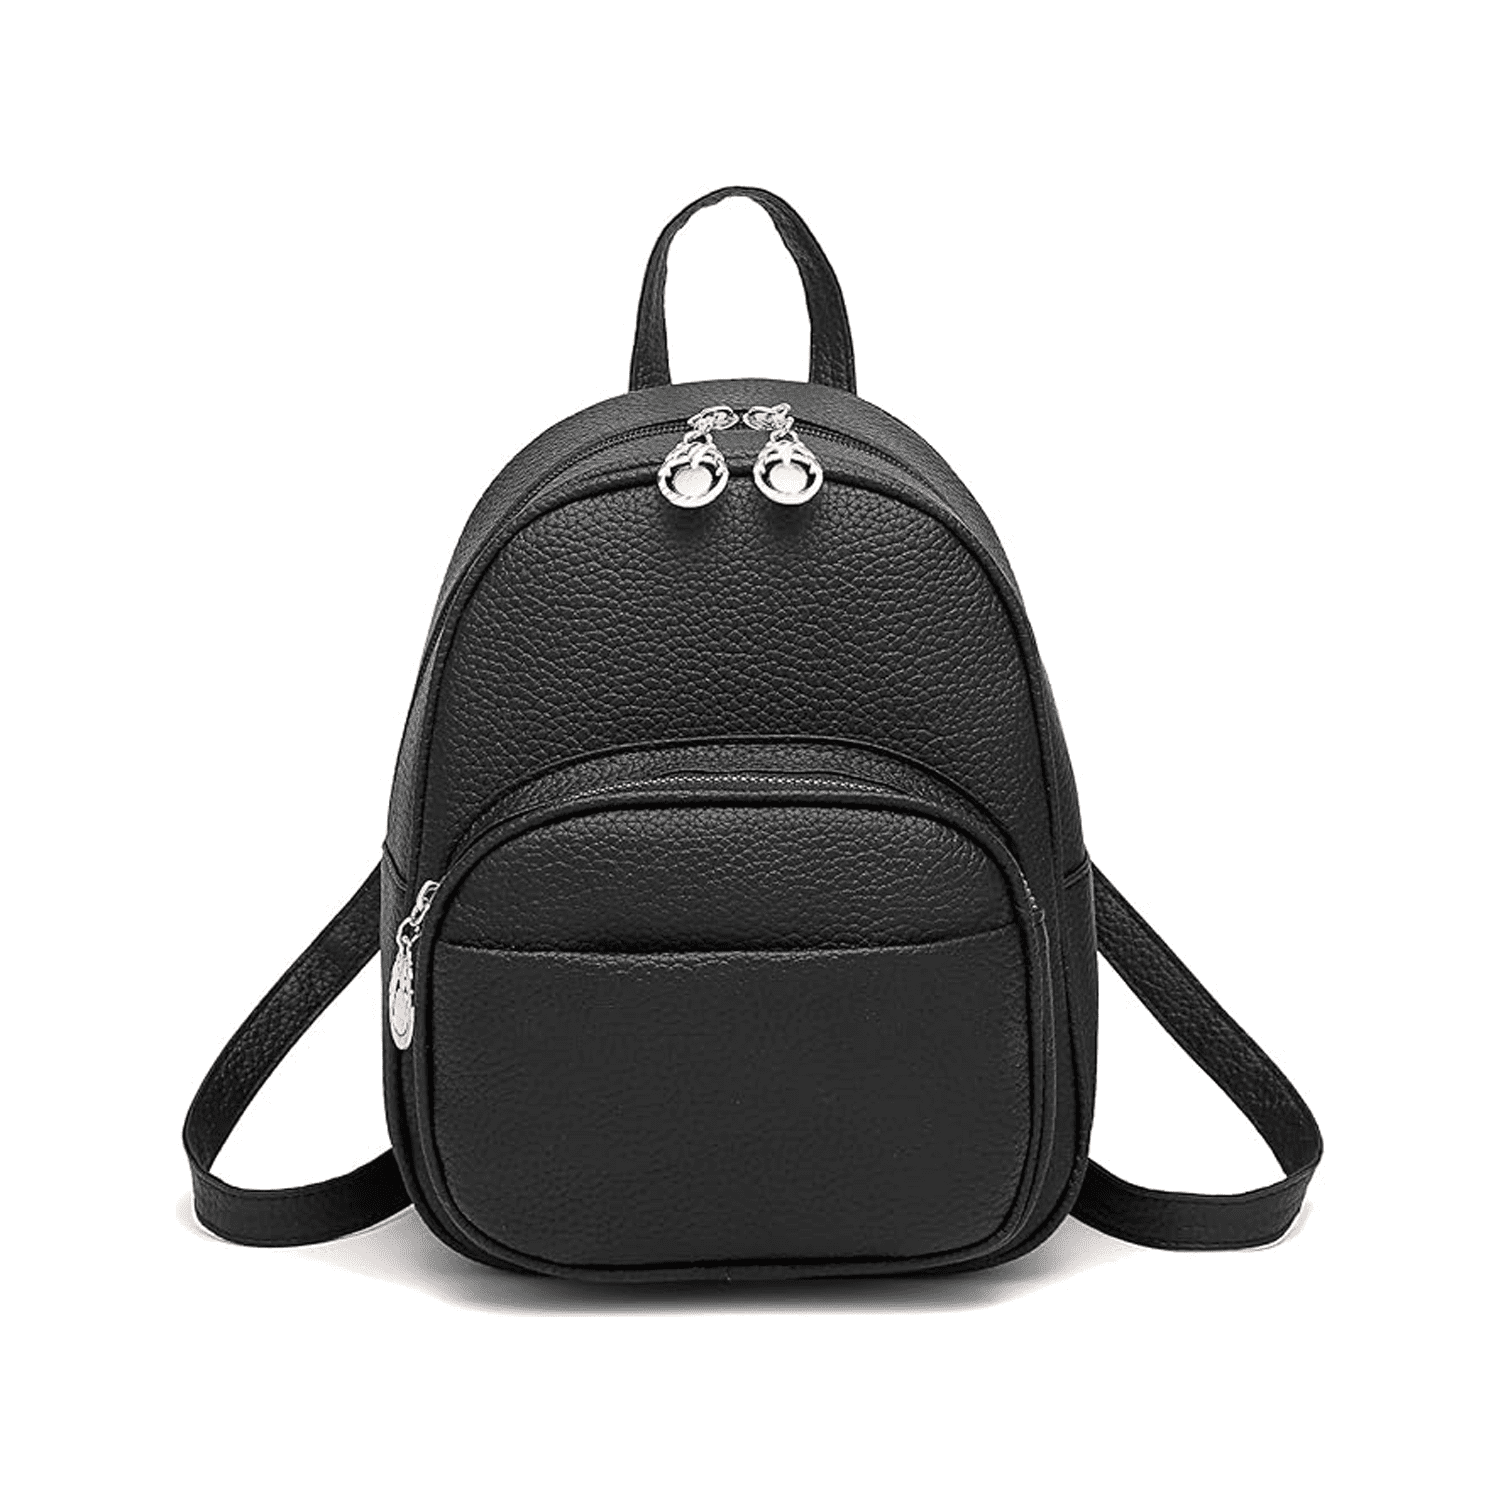 BESTSLE Small Leather Backpack for Women Fashion Shoulder Handbags Multiple Zipper Pockets Cute School Bookbags Ladies Satchel Bags Black 5f4d875b 0cc8 4bf7 9c7b 2aebb967d336.757c6fbb520268d7a08bf05ff86bab50